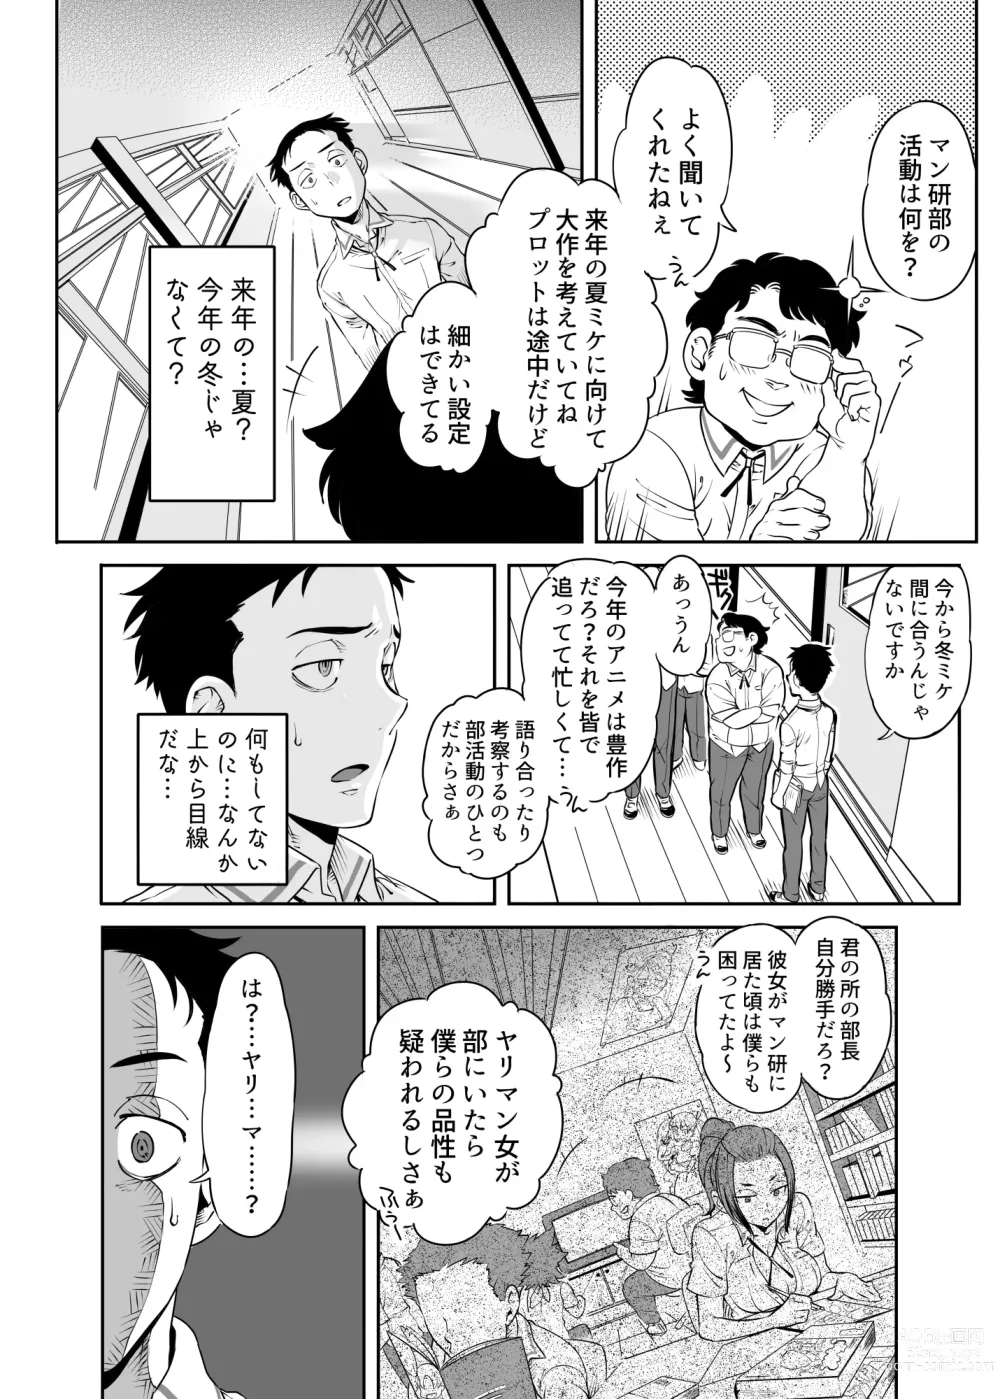 Page 18 of doujinshi URAMAN: Eromanga-bu e Youkoso